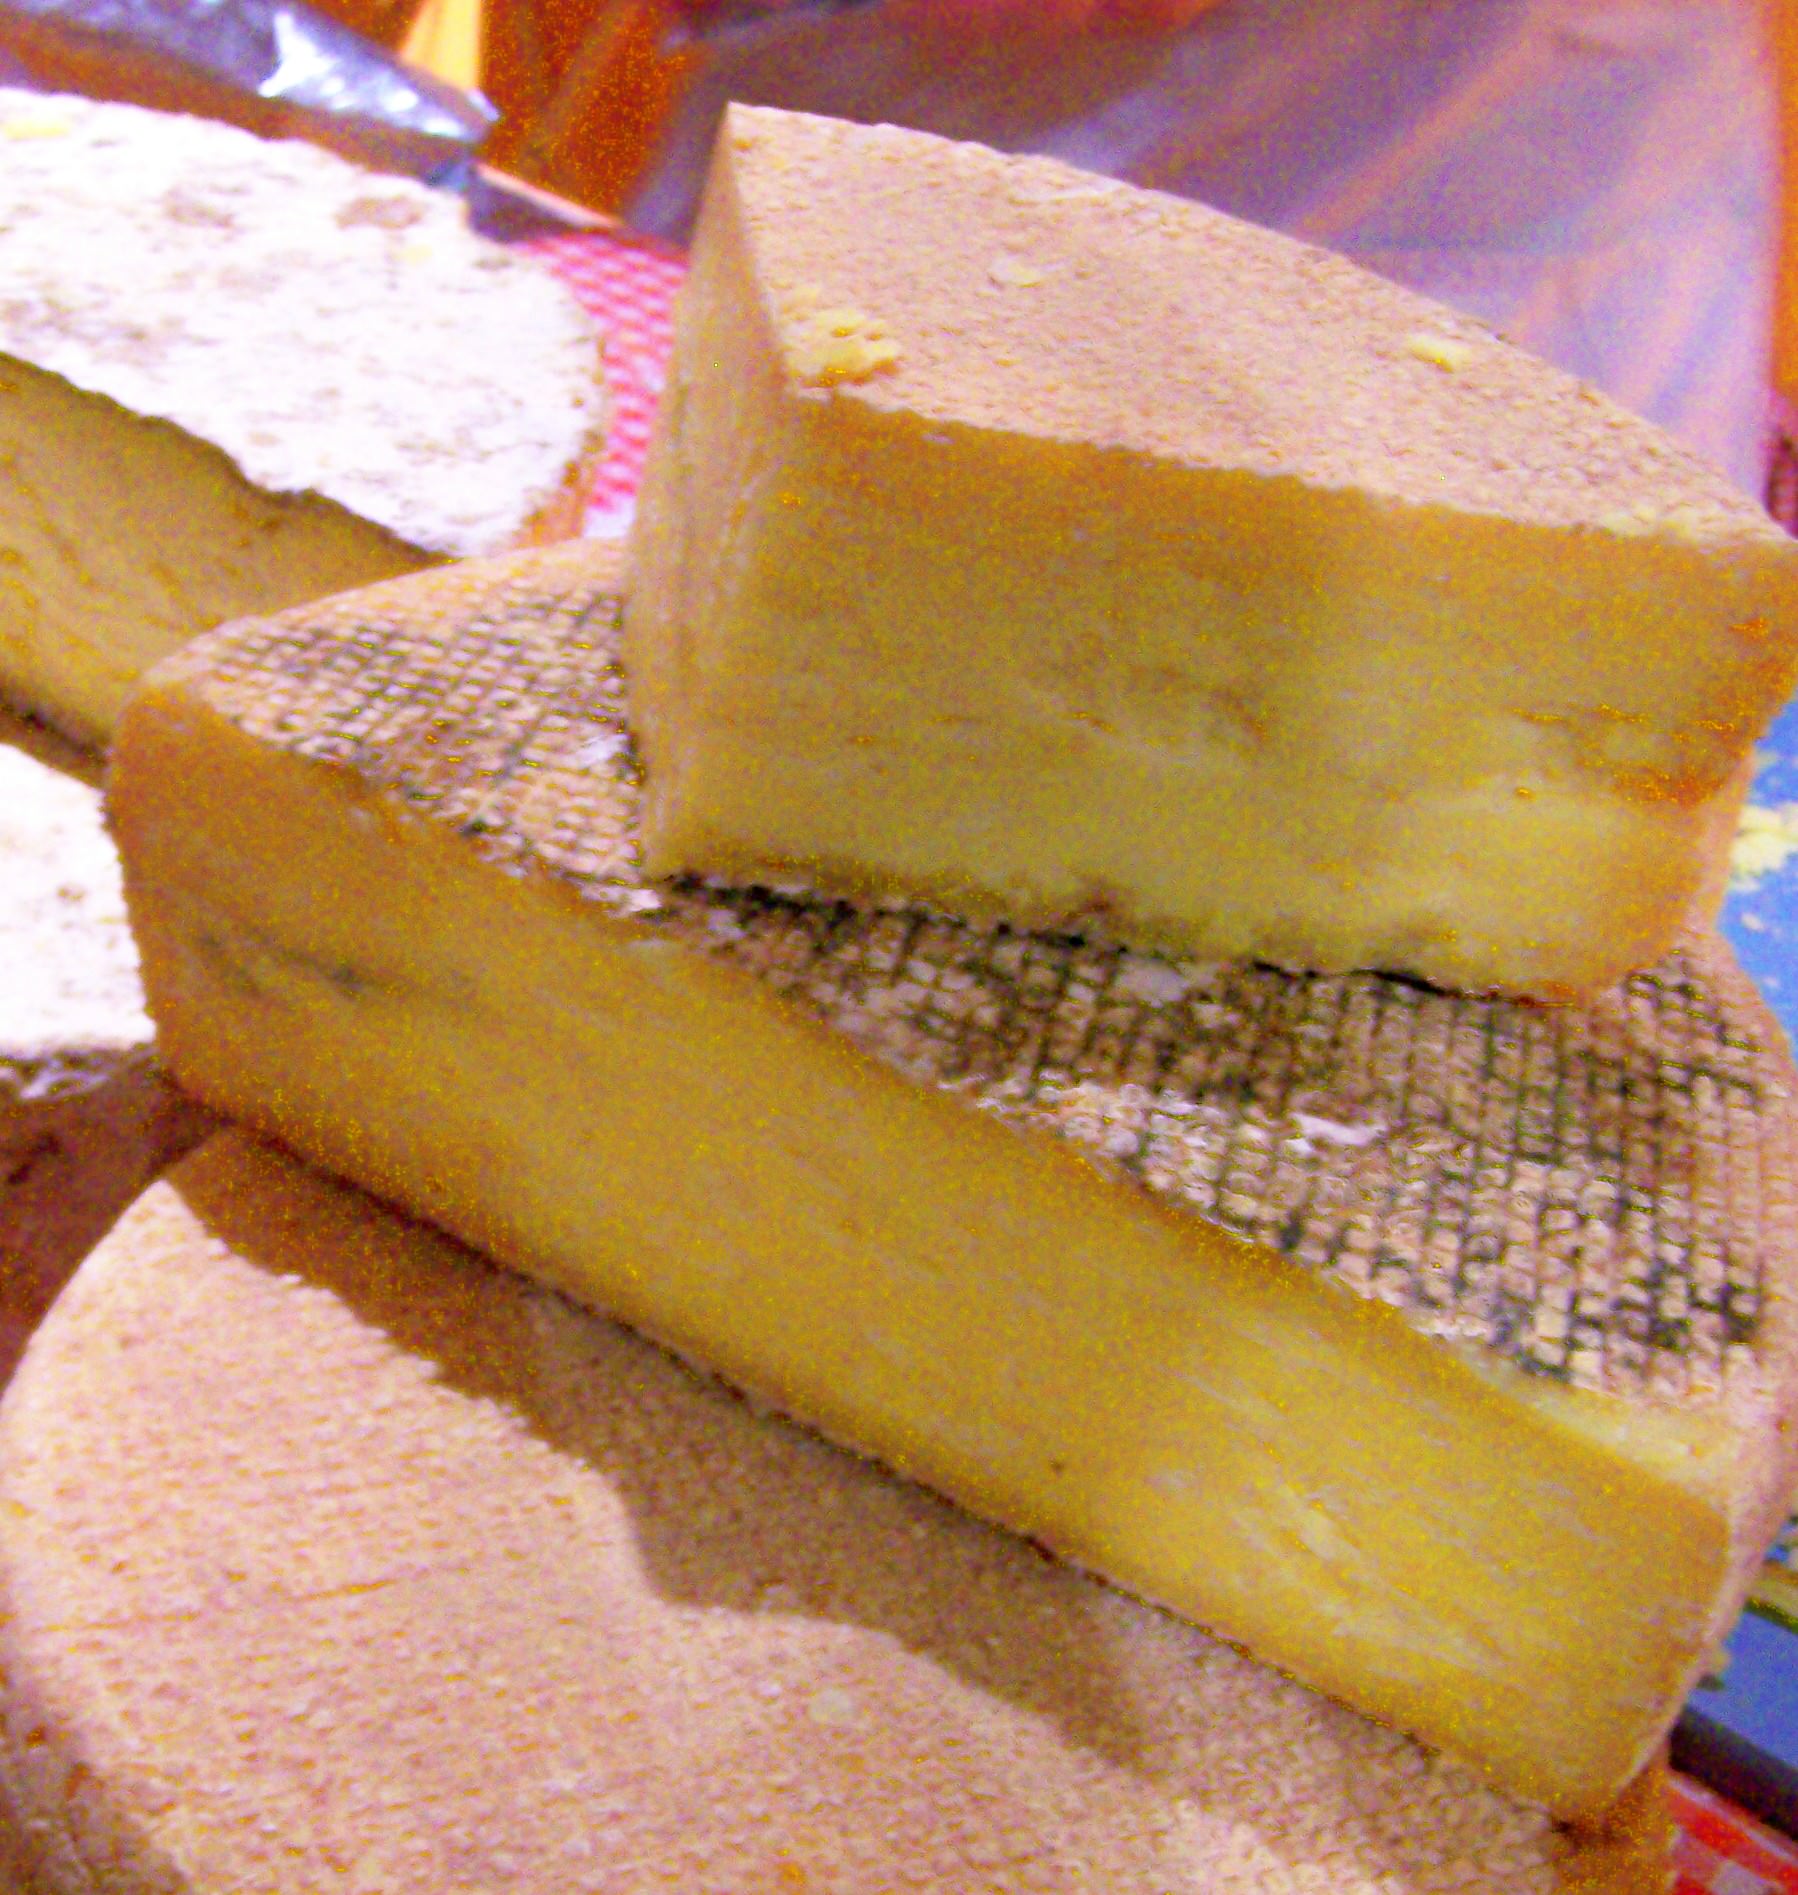 Bobolink Dairy cheeses; photo by L. Goldman